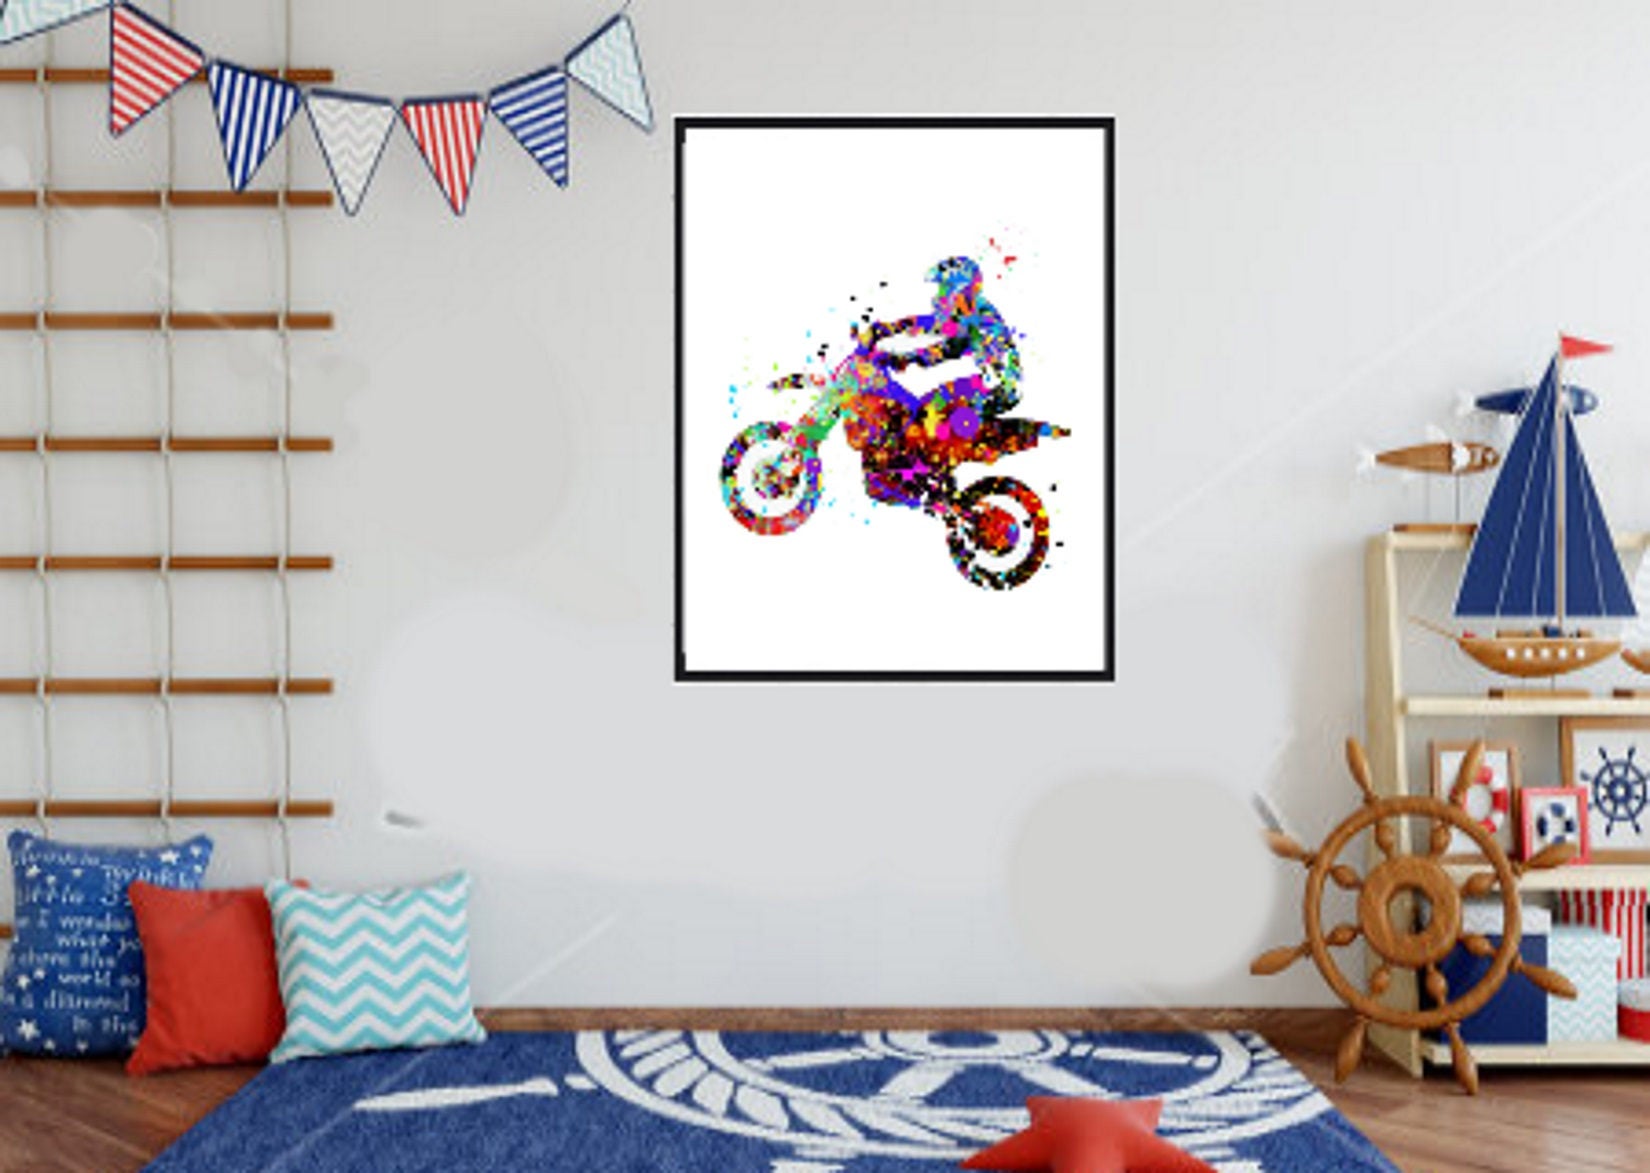 Motocross print by Tompico